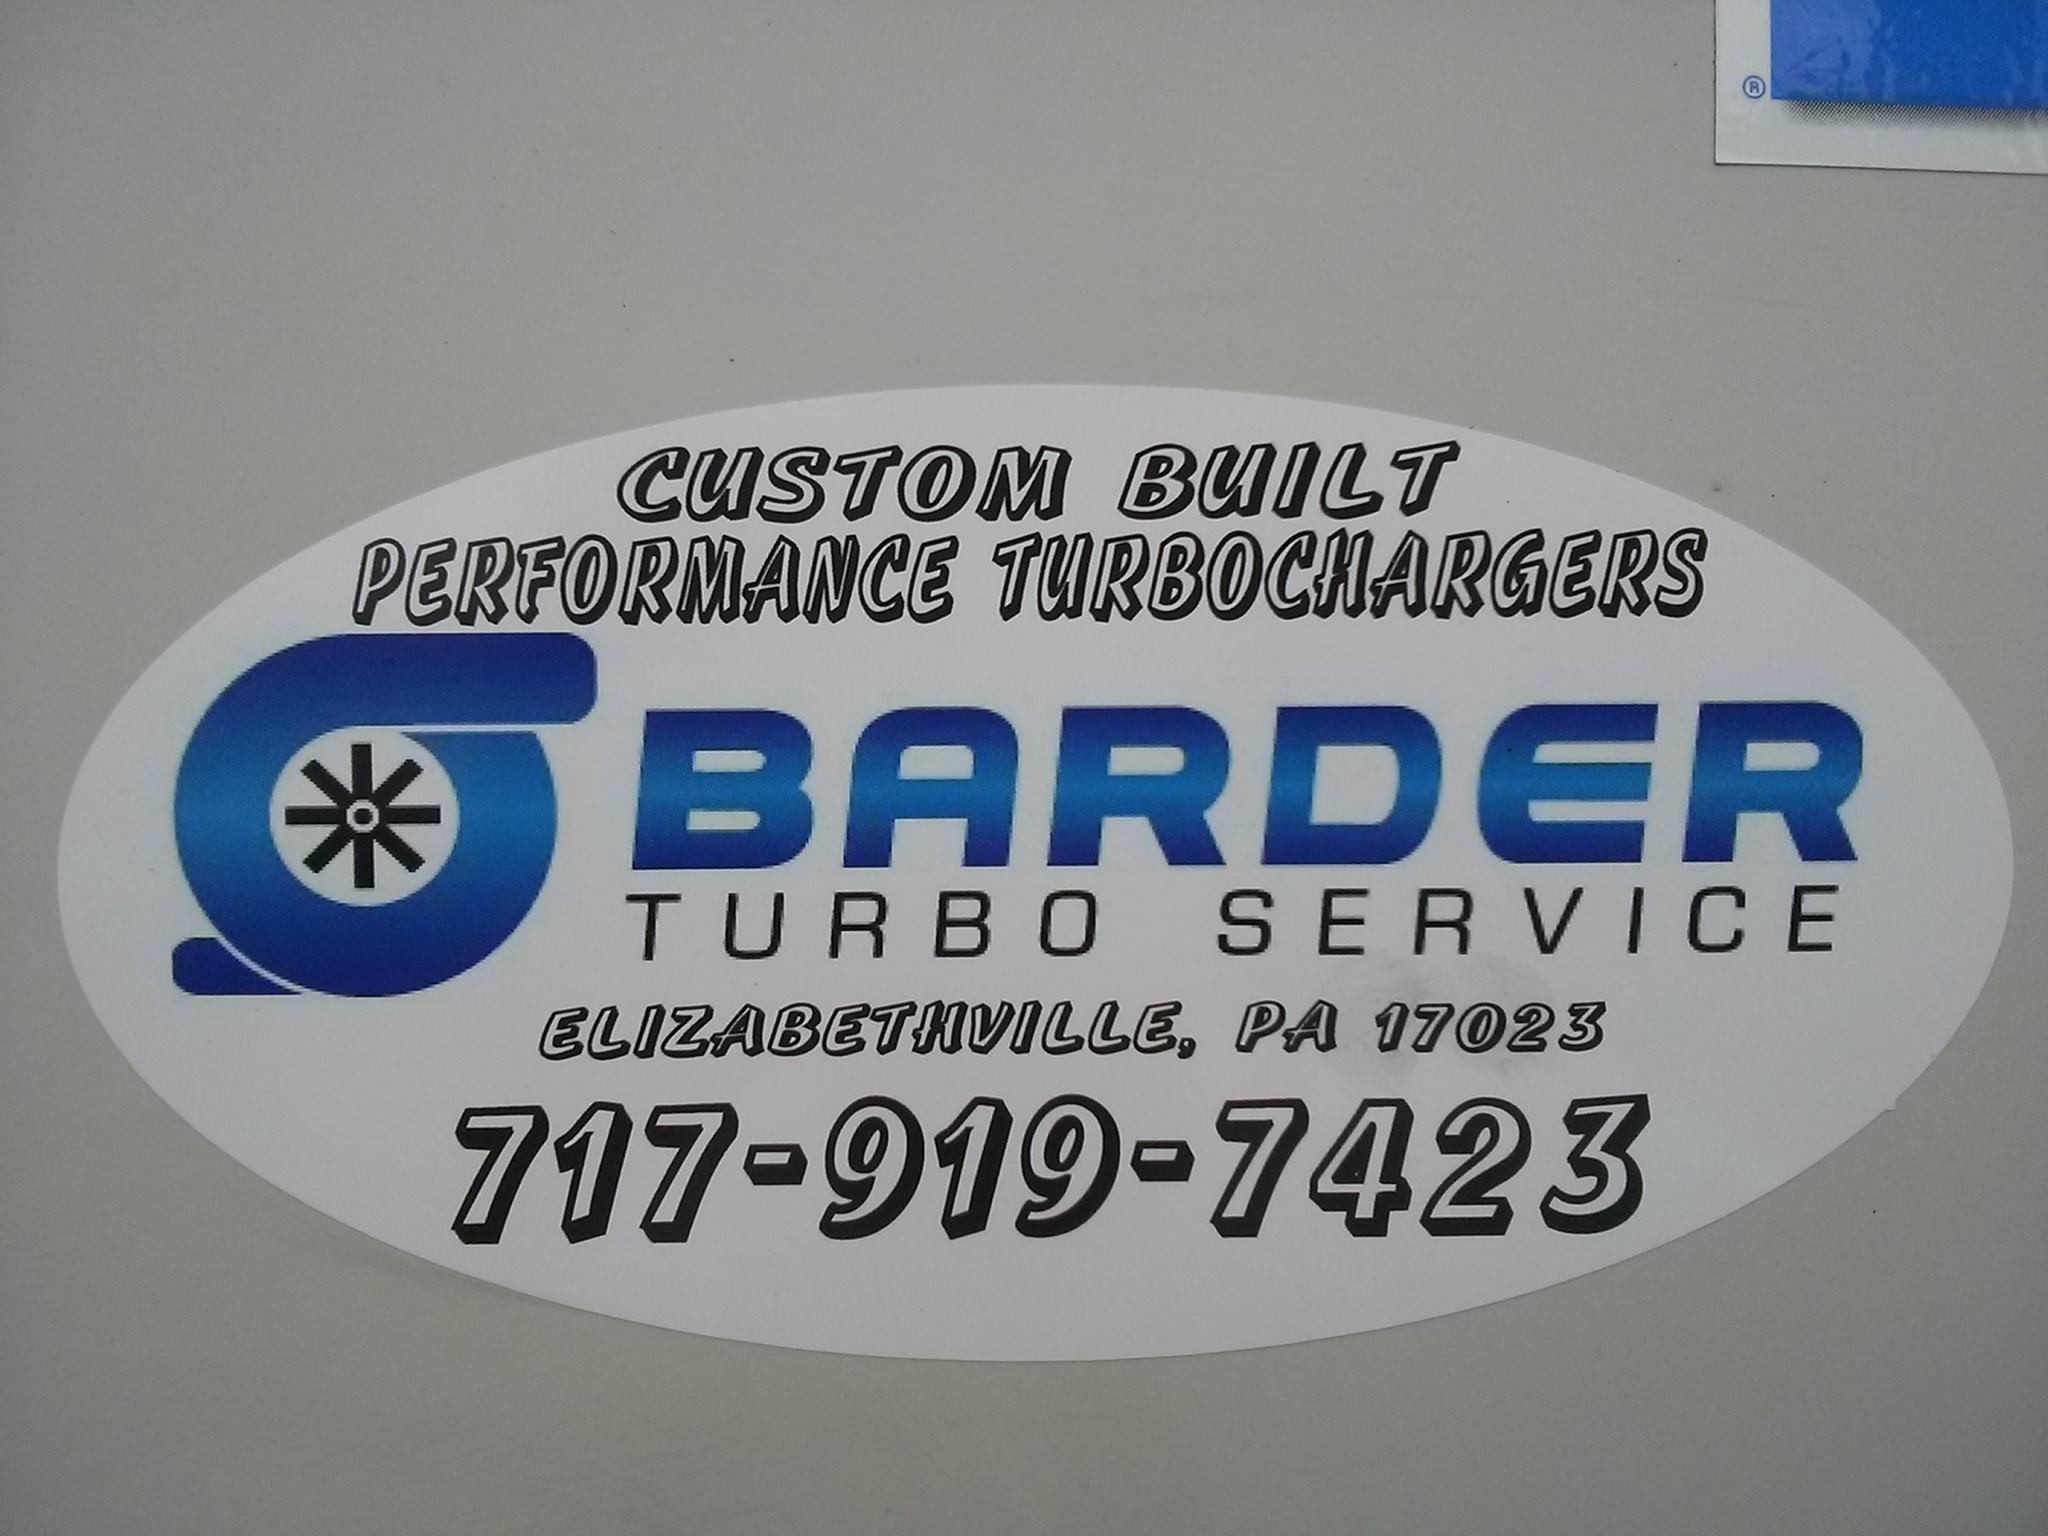 Barder Turbo Service S366 T4